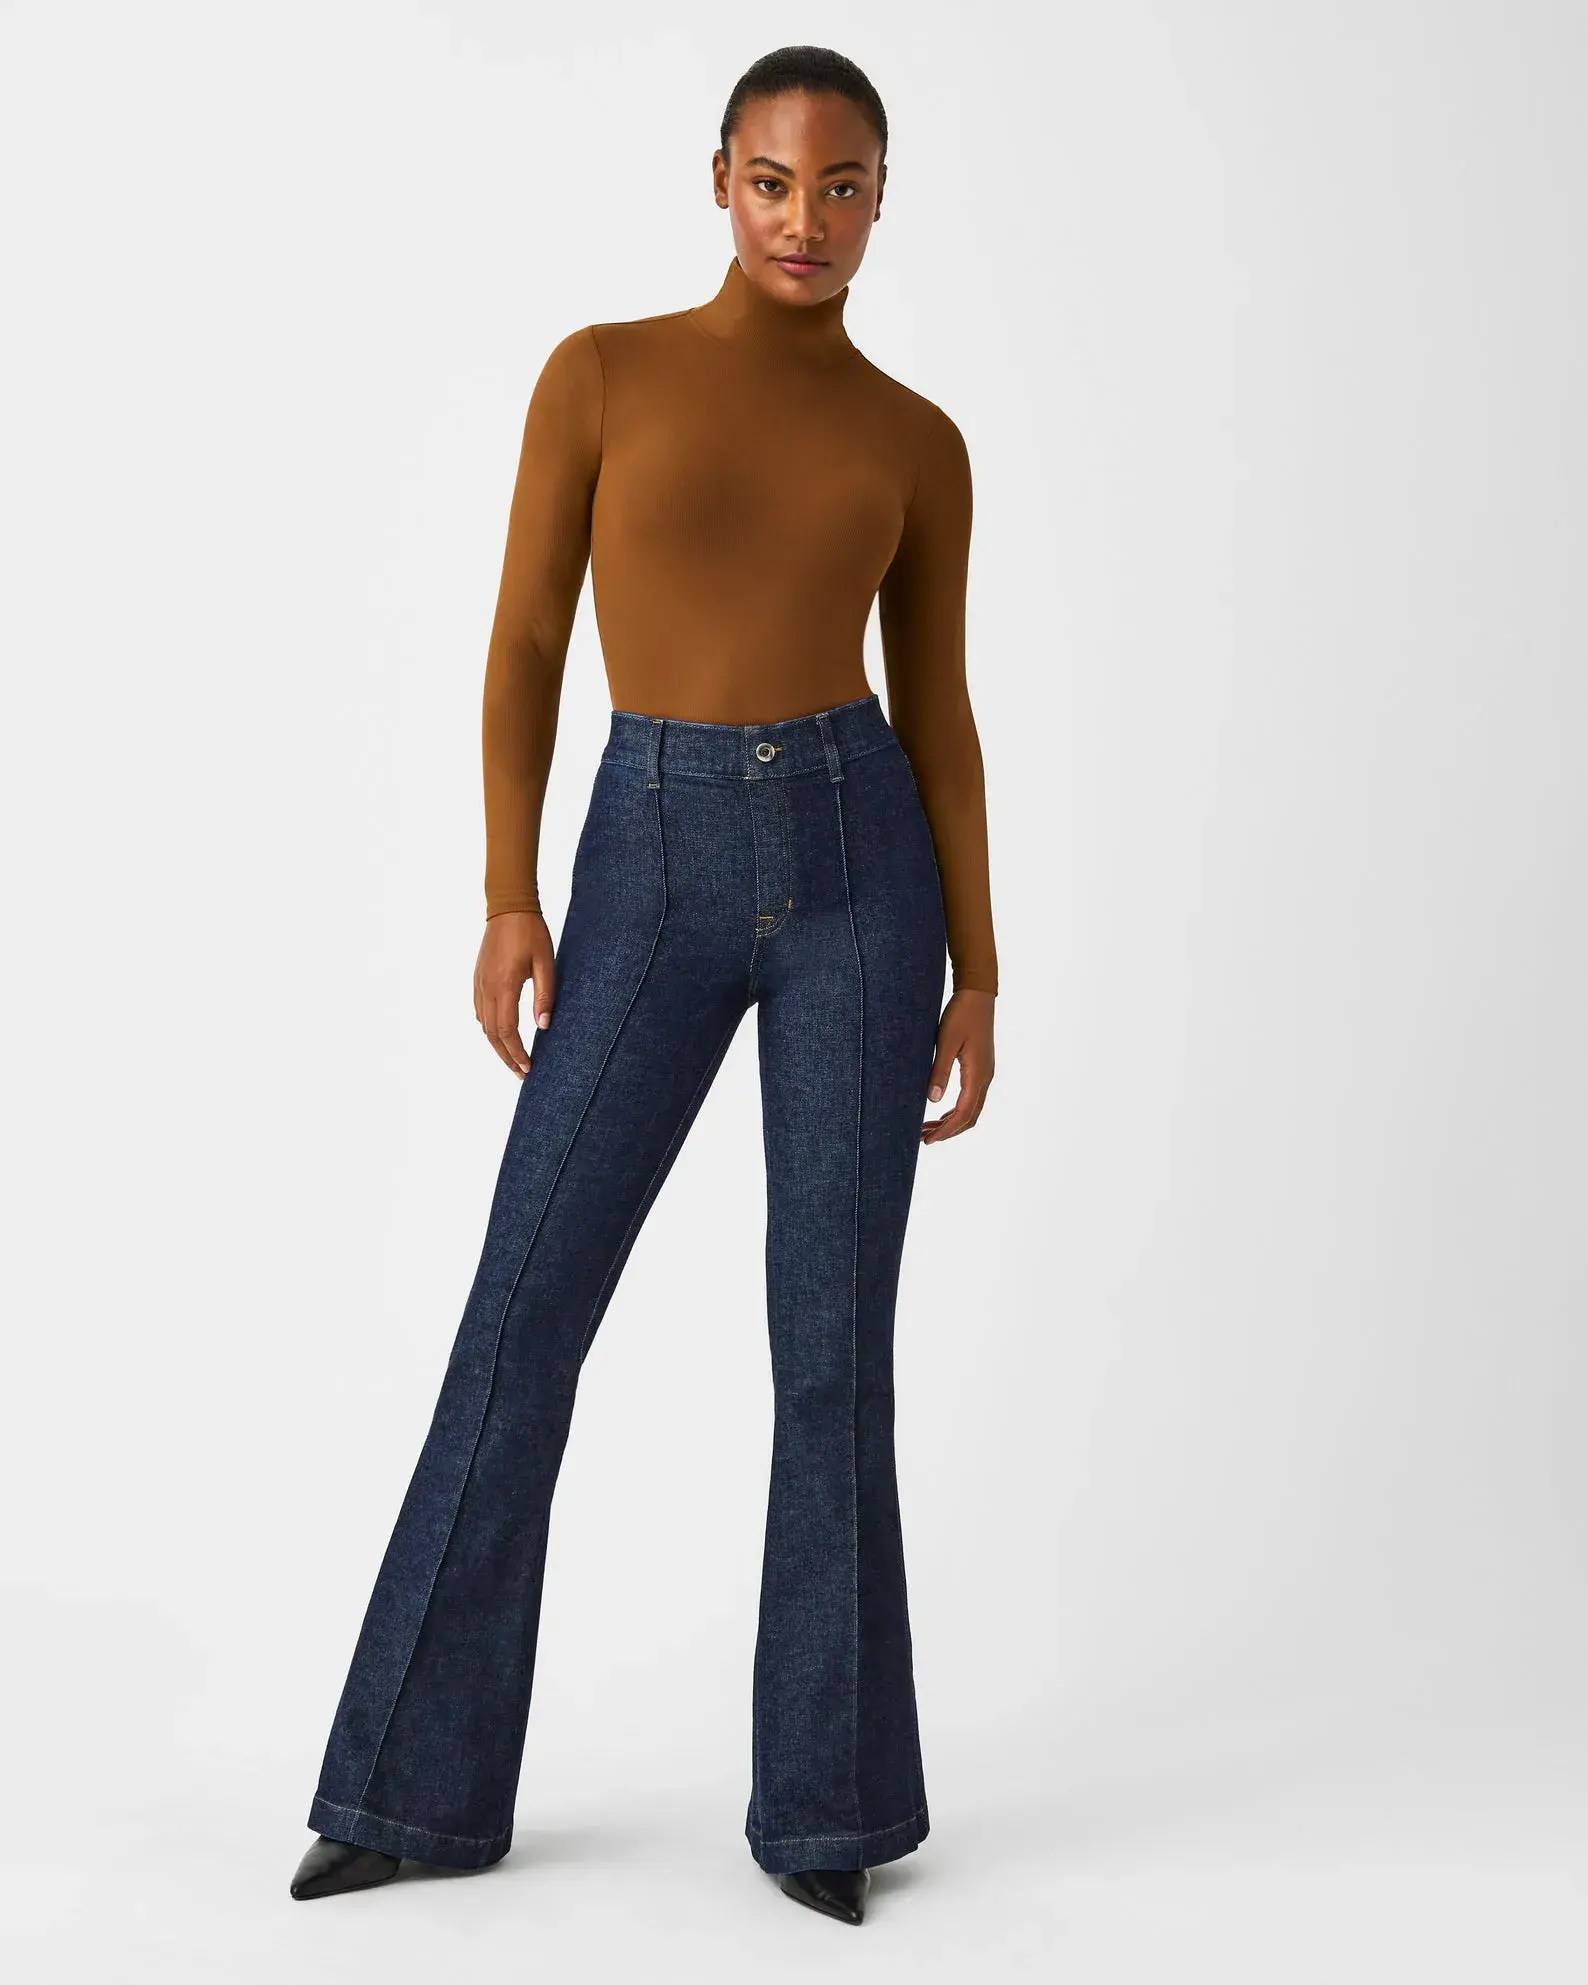 Spanx Pintuck Jeans - Squash Blossom Boutique